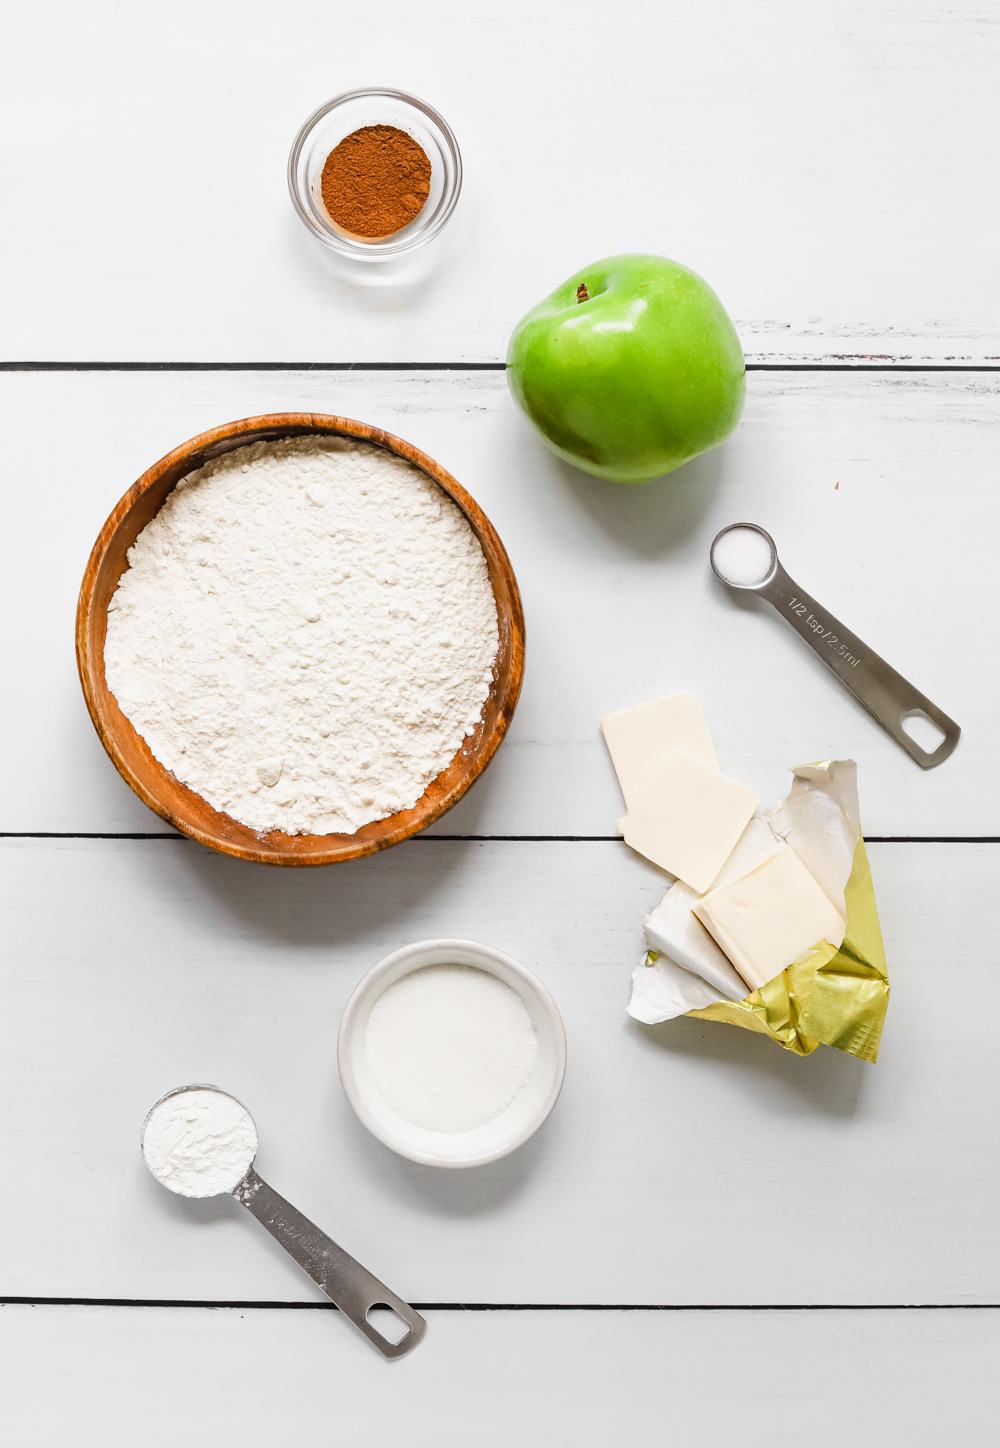 Ingredients to make a vegan apple galette: granny smith apples, cinnamon, salt, sugar, cornstarch, butter, and all purpose flour.